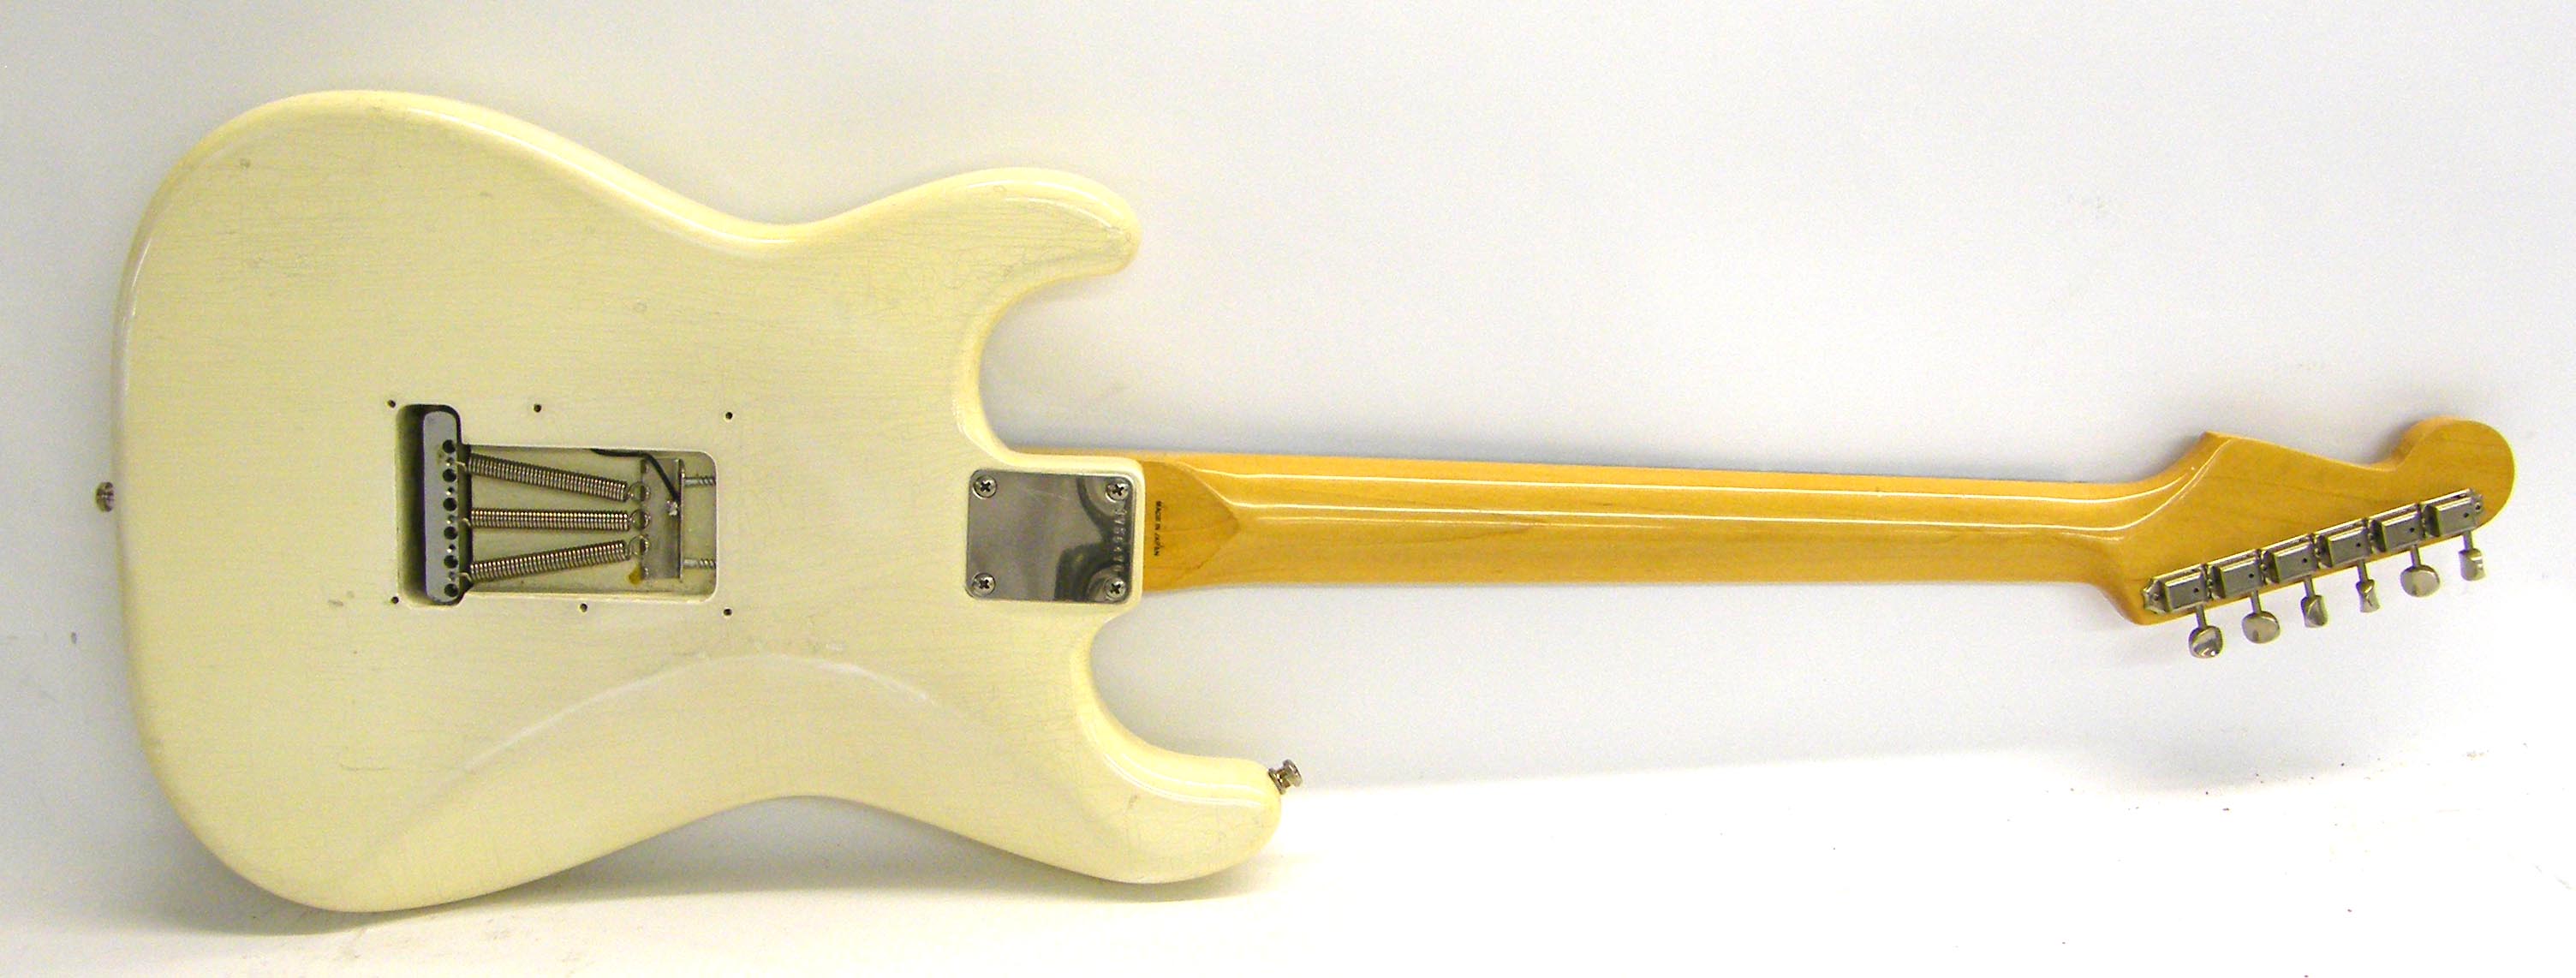 1983 Fender JV ST62-65 Stratocaster electric guitar, made in Japan, ser. no. JV56470, white finish - Image 2 of 2